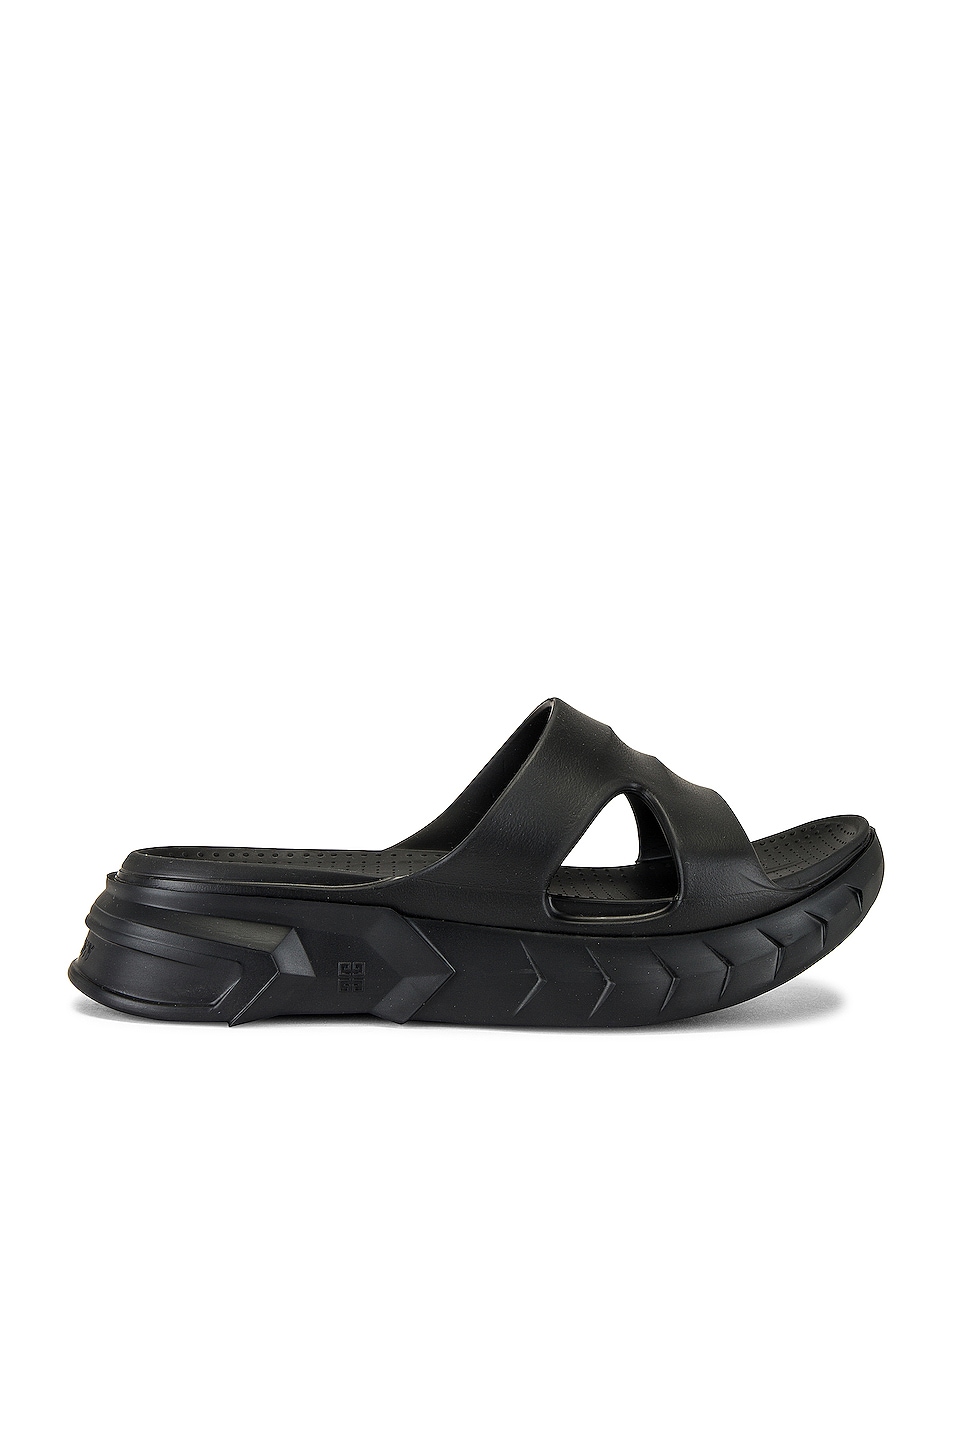 Givenchy Marshmallow Slider Sandal in Black | FWRD